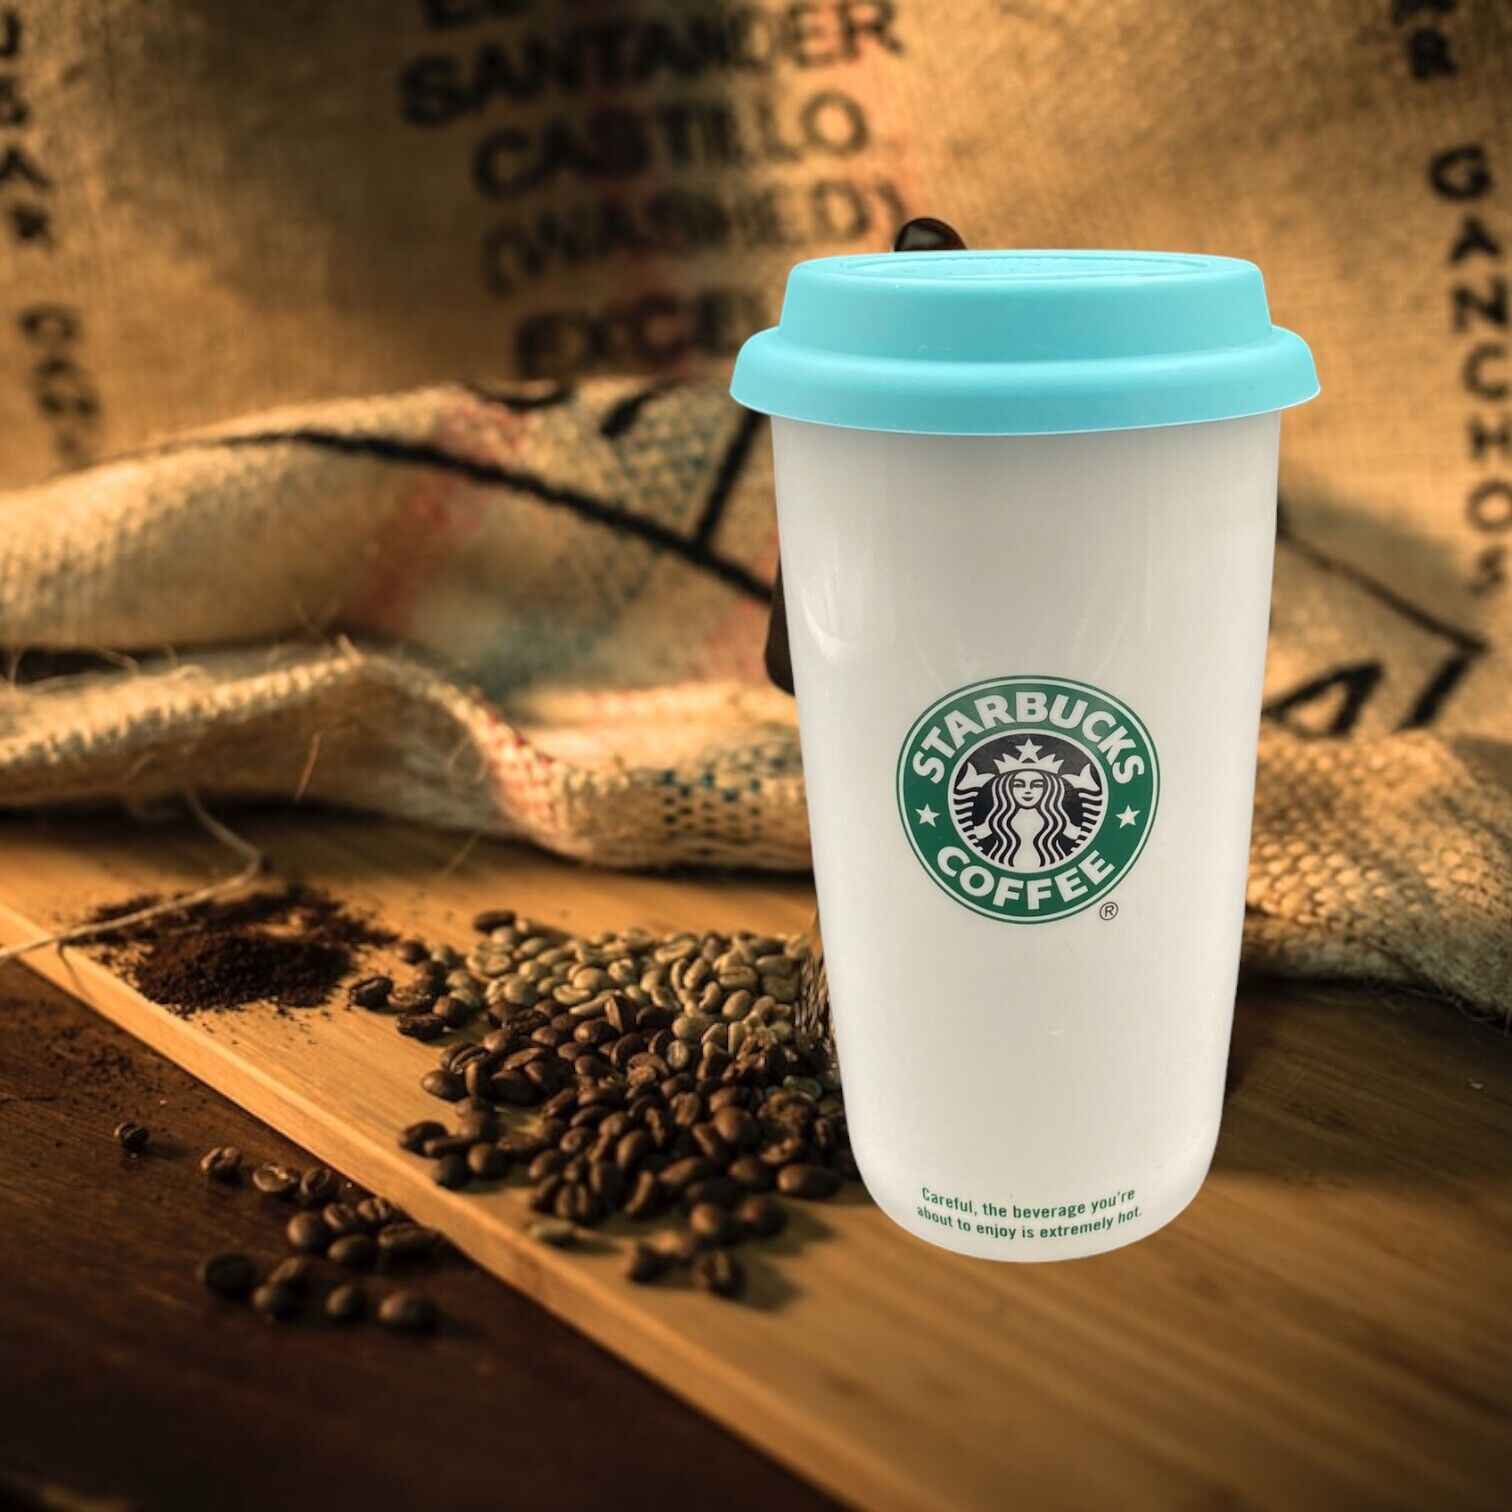 2009 Starbucks 12oz Mermaid Siren Ceramic Travel Coffee Mug/Tumbler with Lid